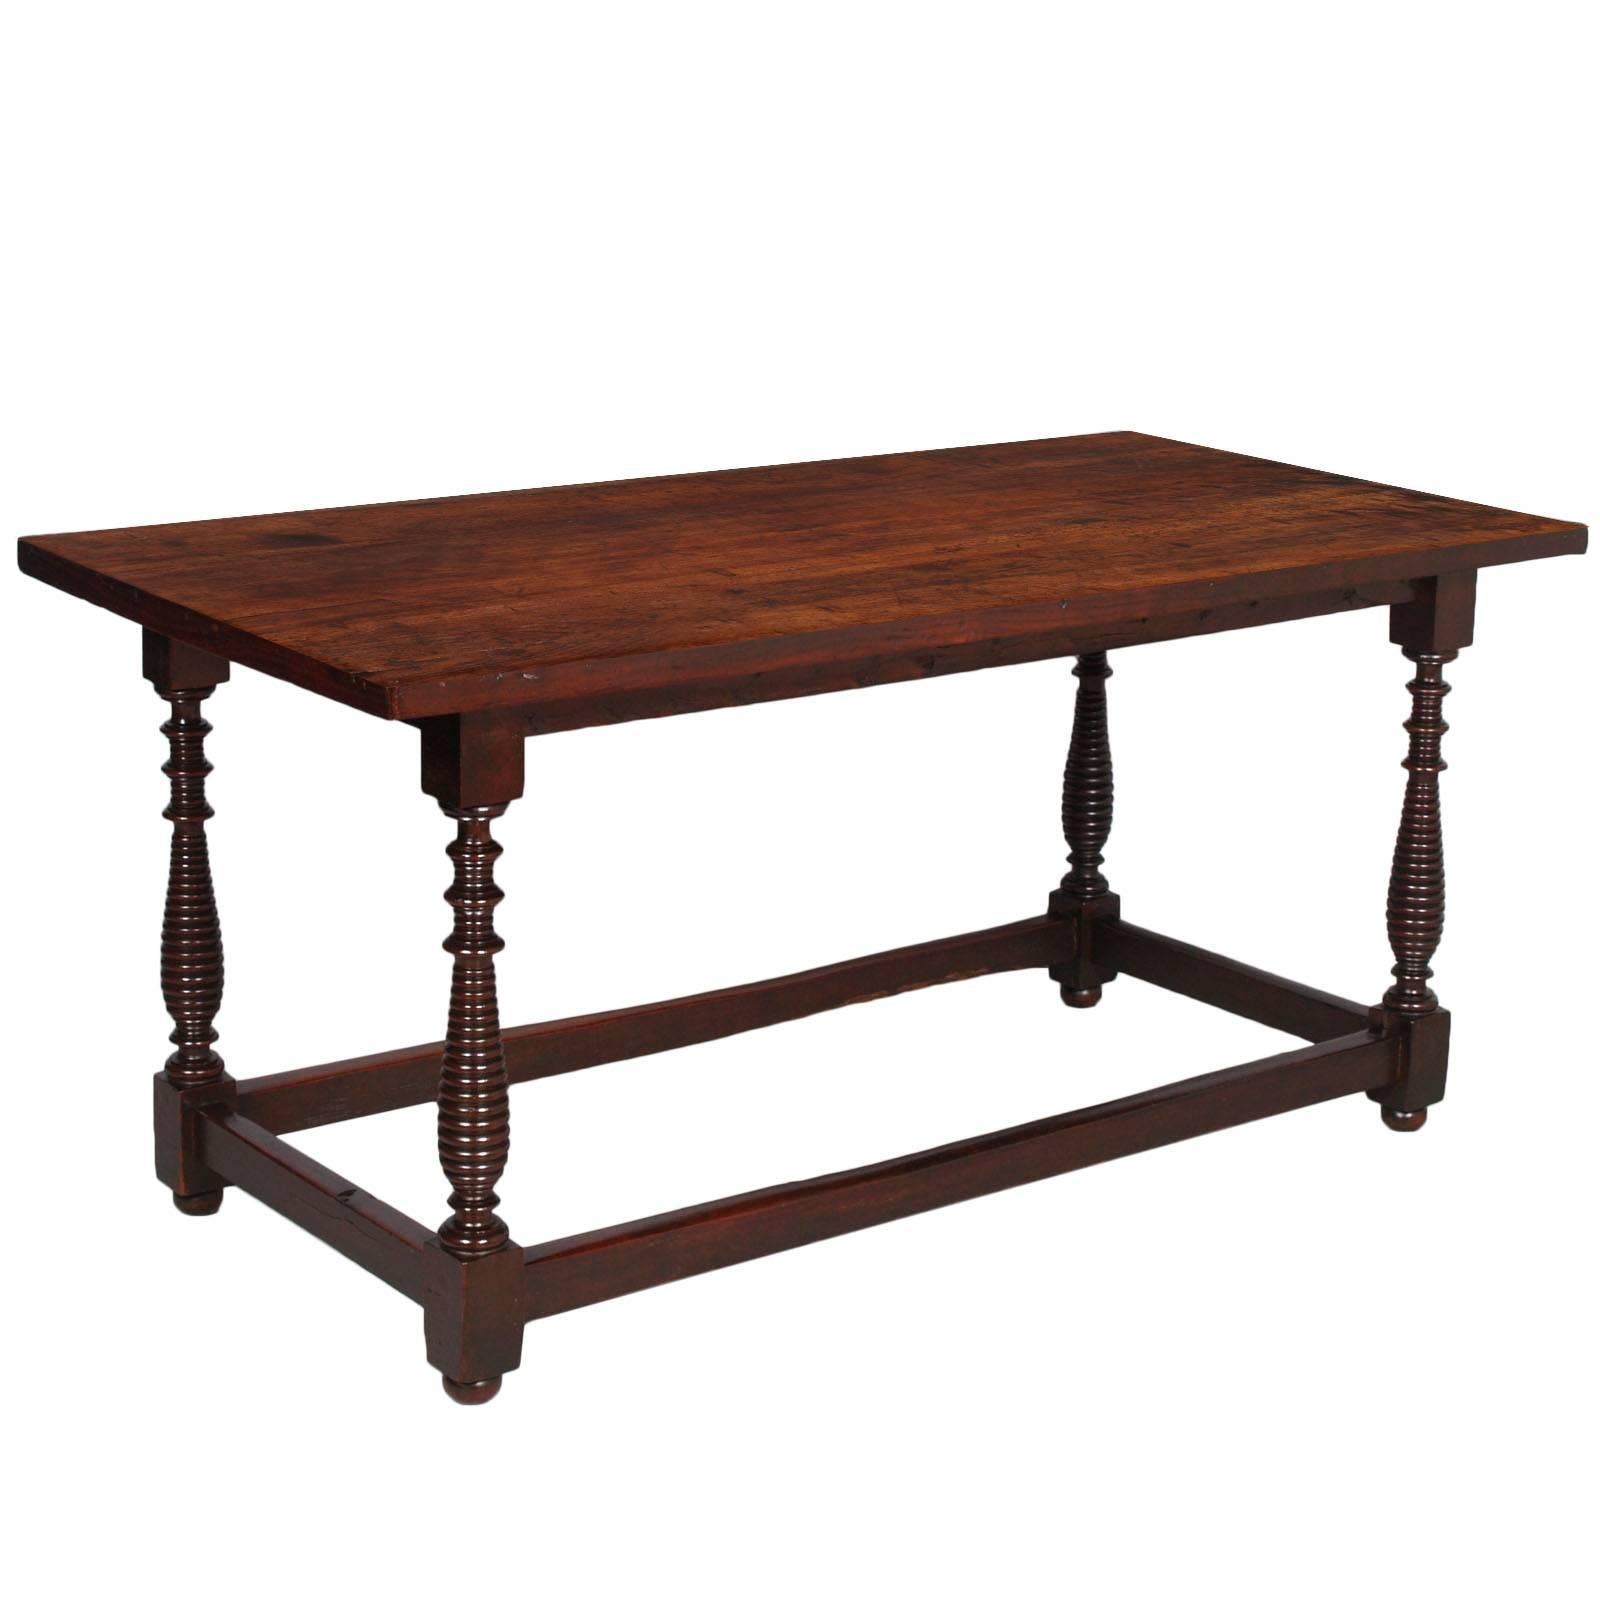 17th Century important Renaissance Italian Table in solid oak wood